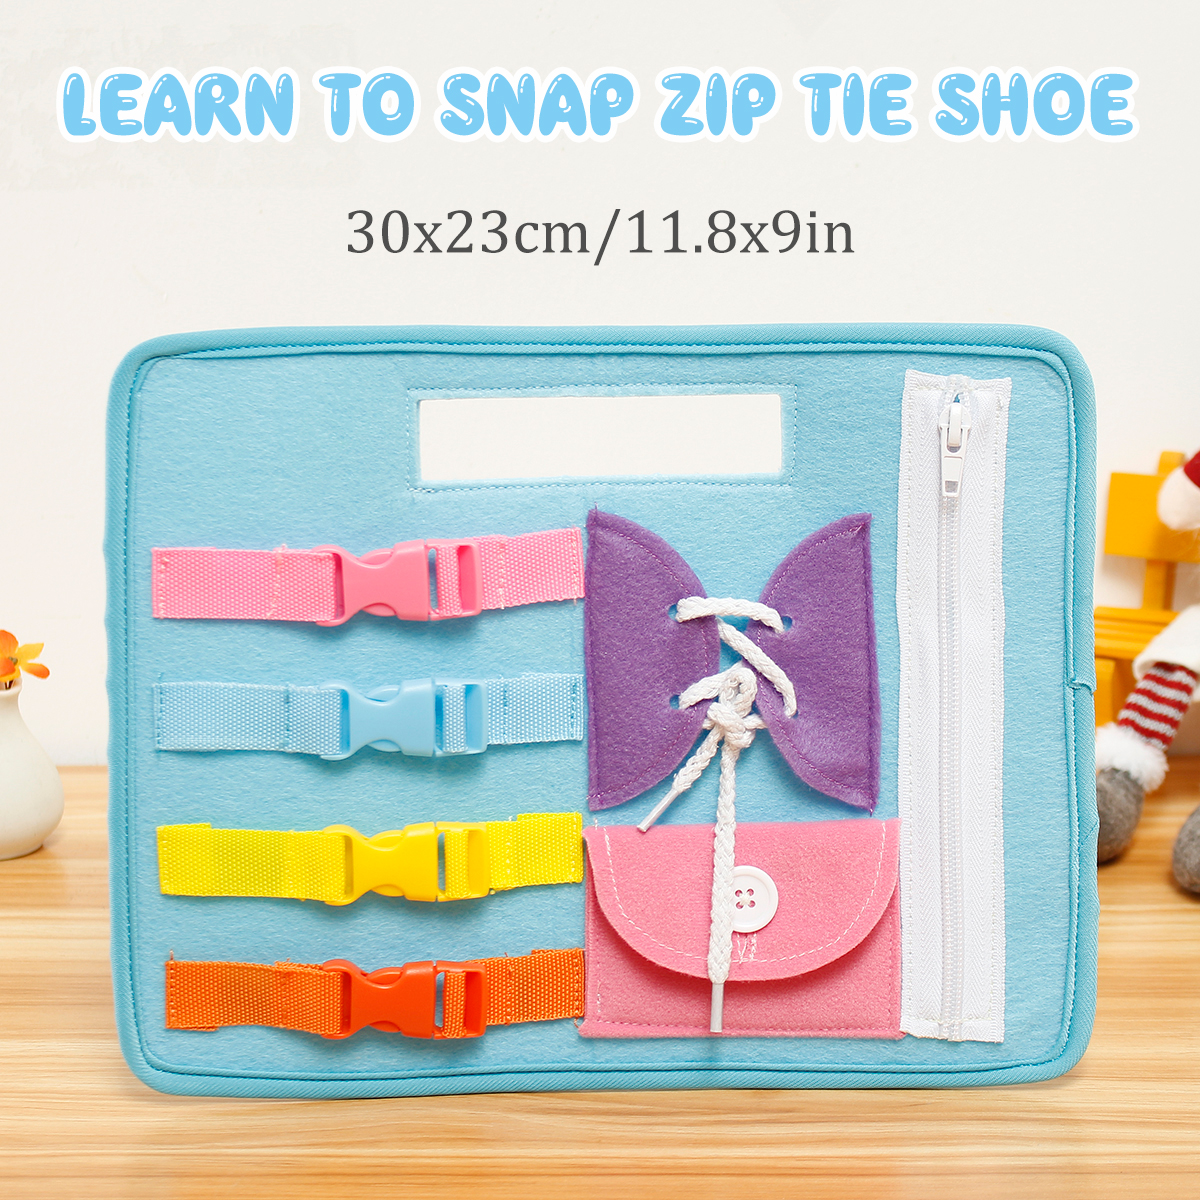 Kids-Boys-Girls-Basic-Skills-Board-Developmental-Toys-Learn-to-Snap-Zip-Tie-Shoe-Laces-Educational-T-1636898-2